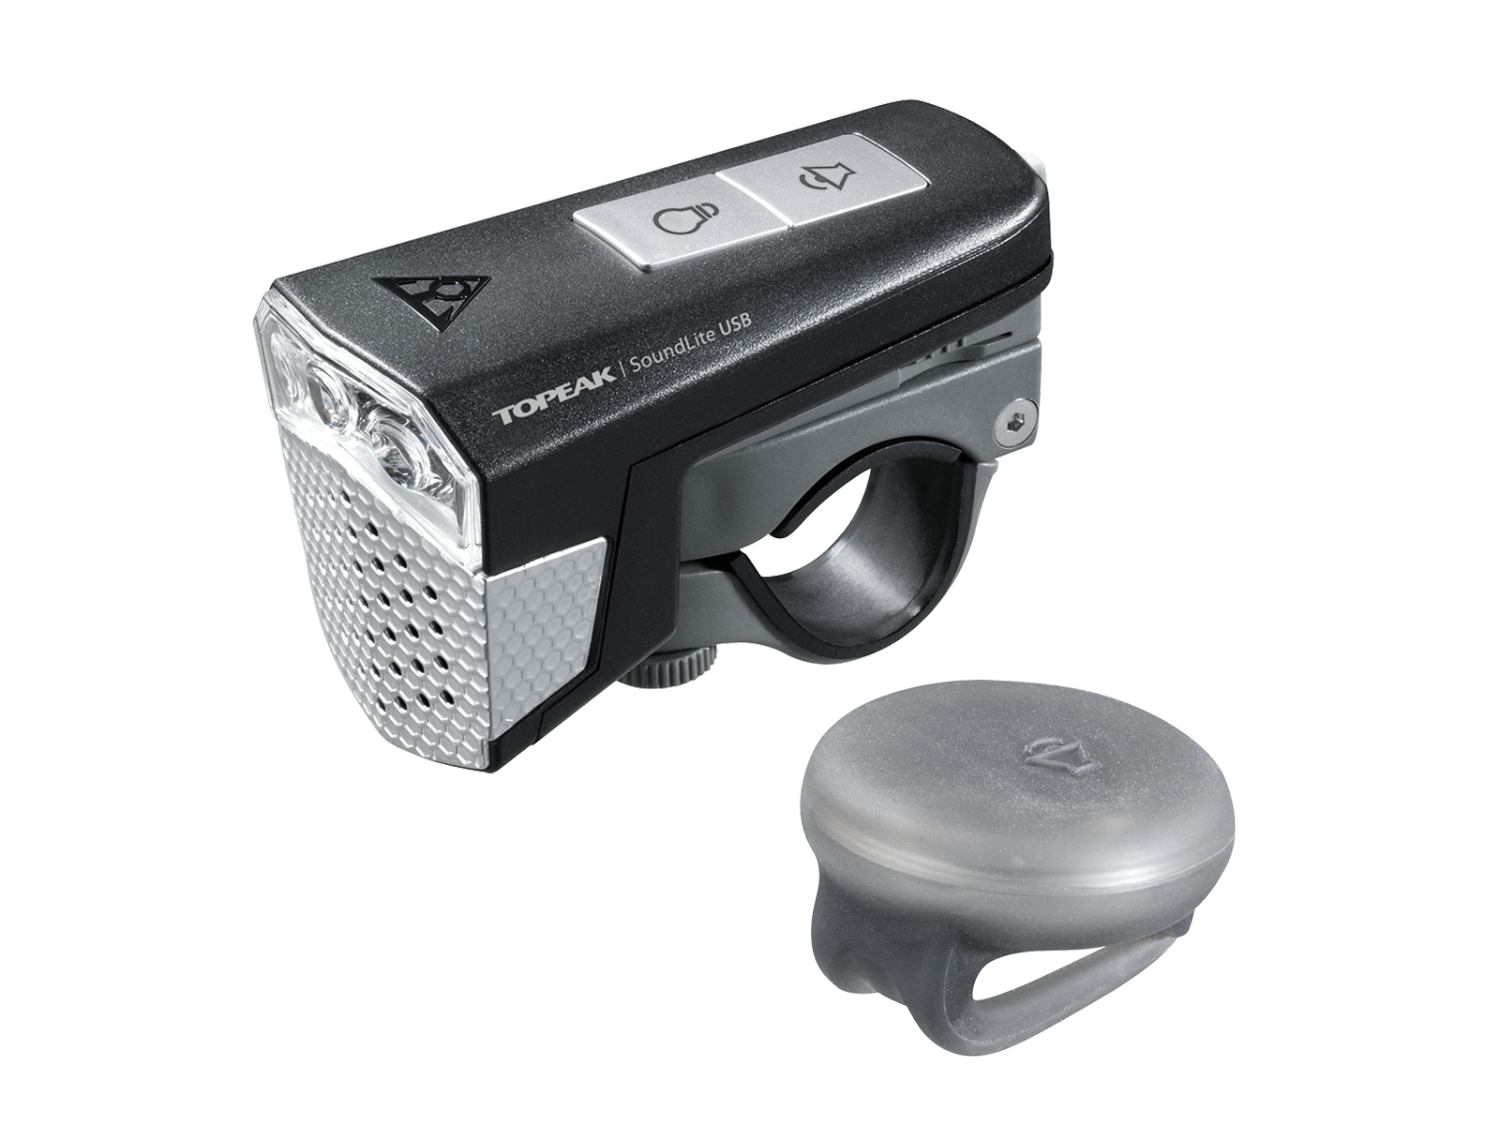 Фара велосипедная Topeak SoundLite USB, передняя, Black, TMS077B фара передняя sigma buster 2000 3 светодиода cree 2000лм освещаемая дистанция 200м 17000